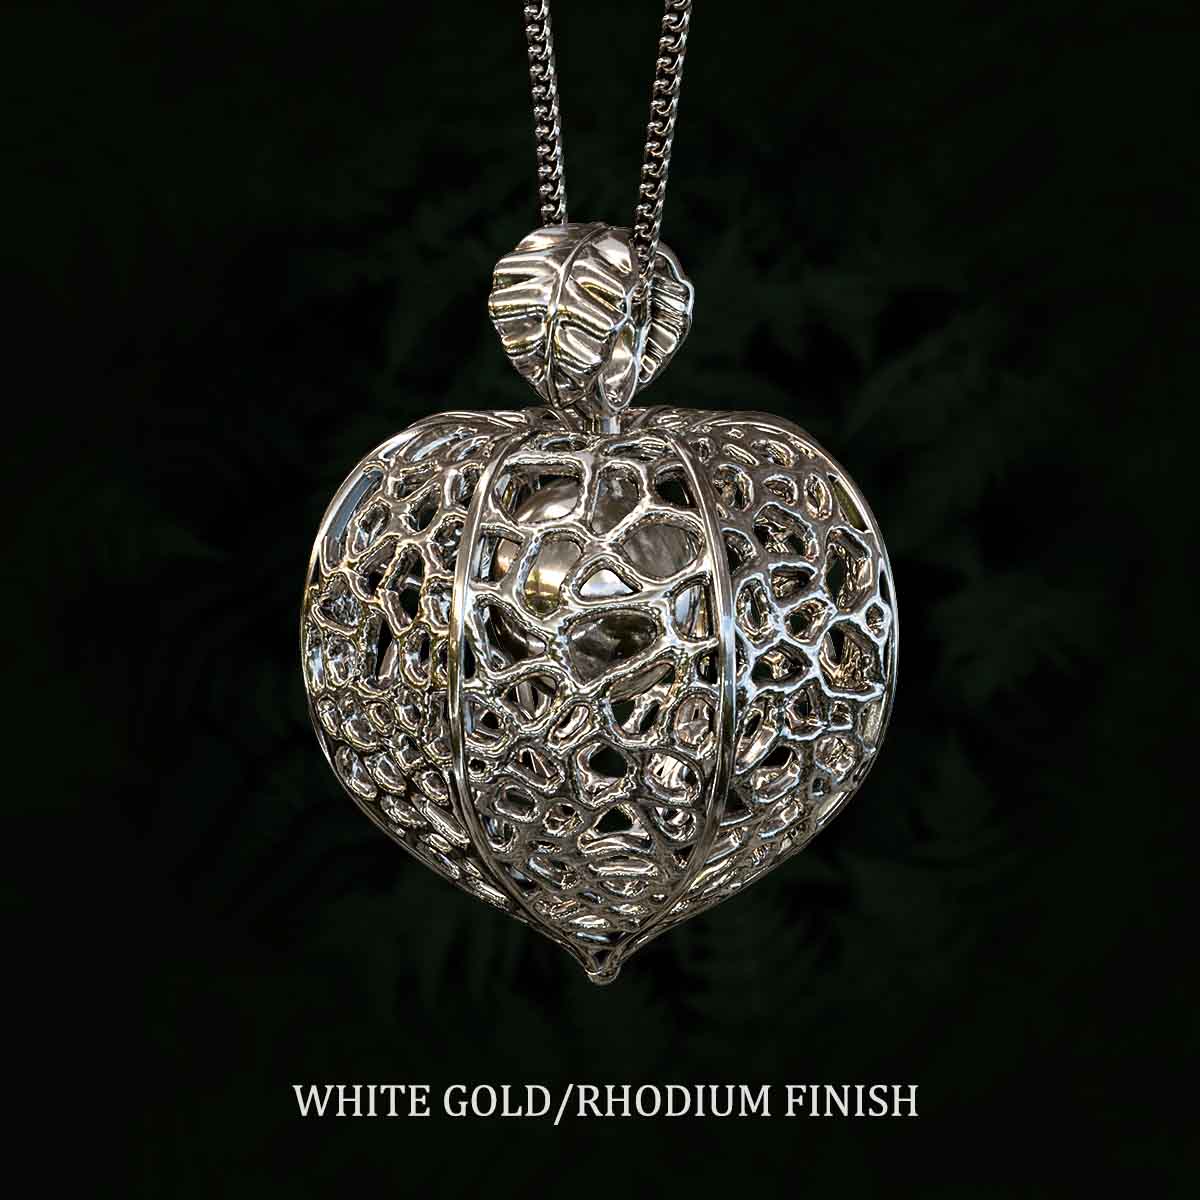 White-Gold-Rhodium-Finish-Chinese-Lantern-Plant-Pendant-Jewelry-For-Necklace